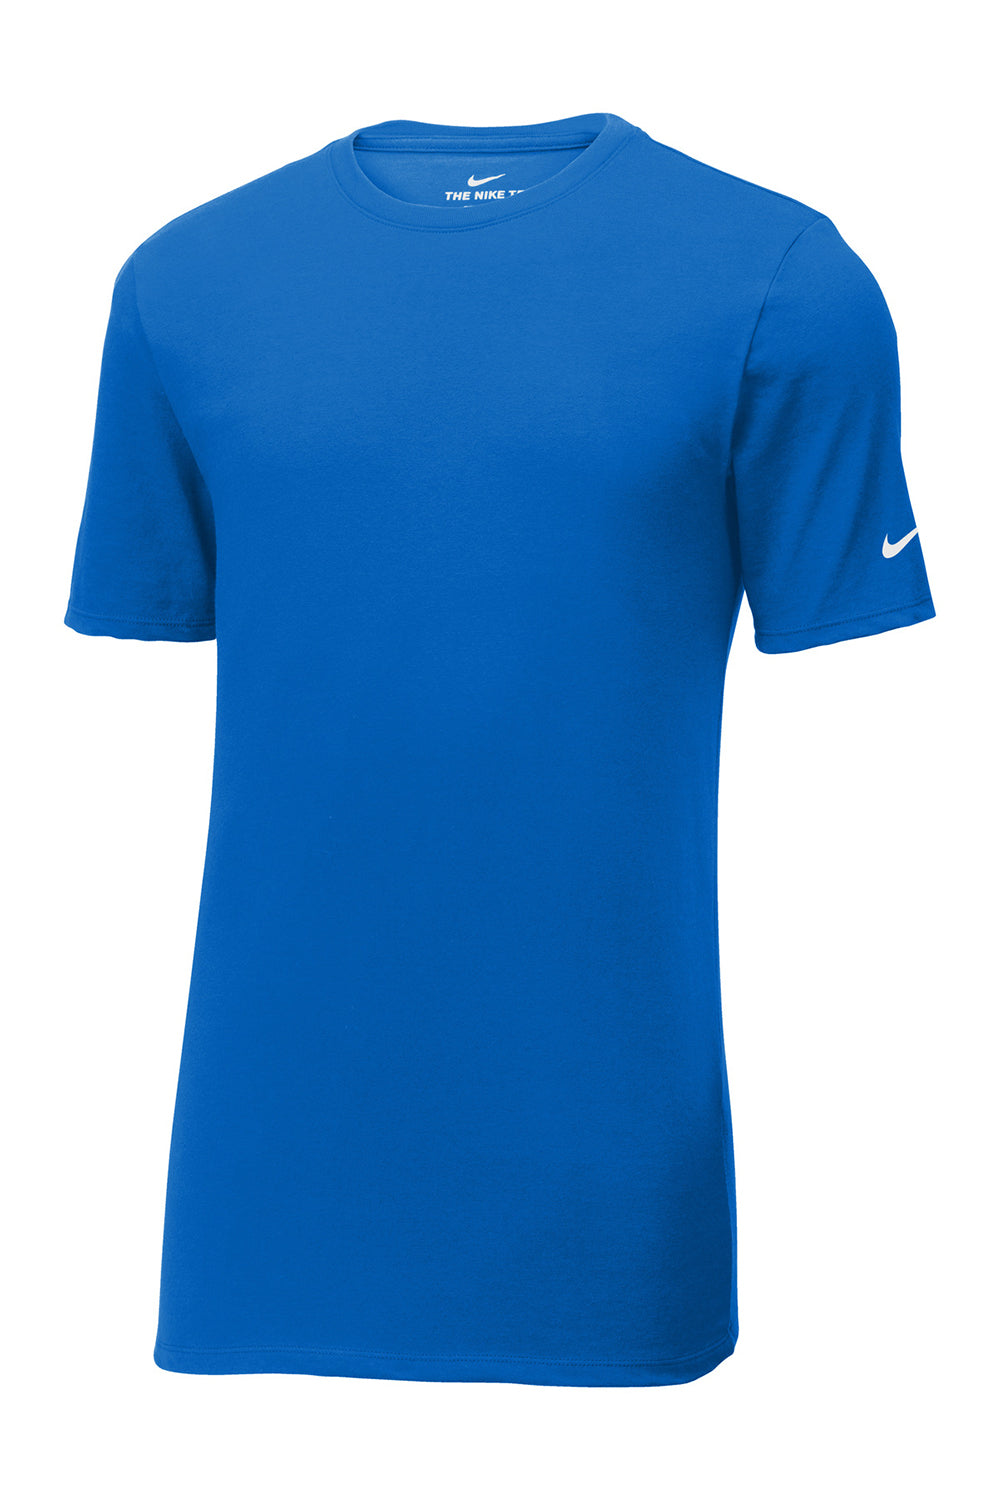 Nike NKBQ5231 Mens Dri-Fit Moisture Wicking Short Sleeve Crewneck T-Shirt Game Royal Blue Flat Front